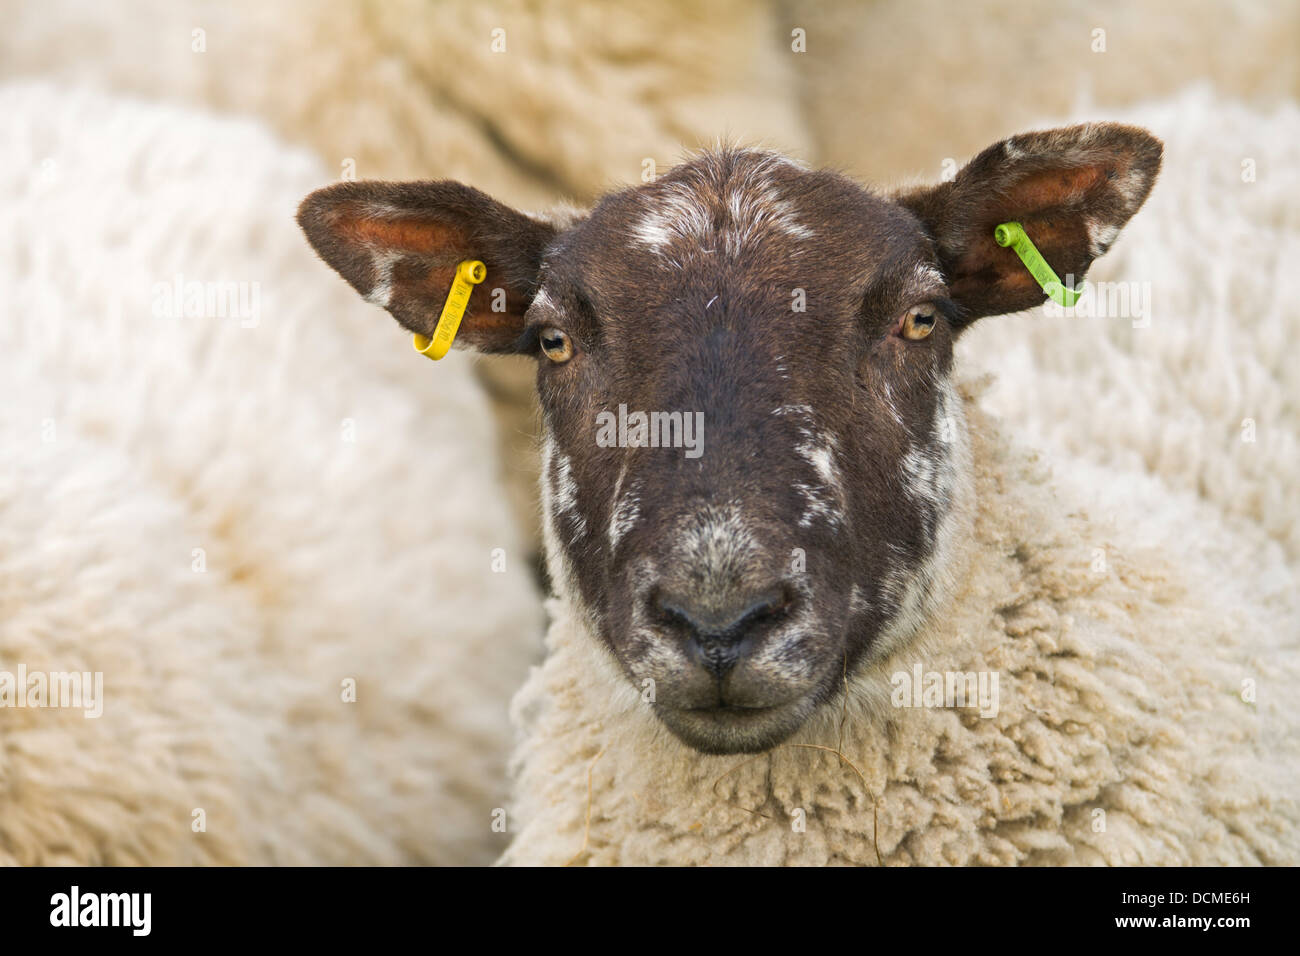 Black-faced sheep staring directly at the camera, Northumberland, England Stock Photo